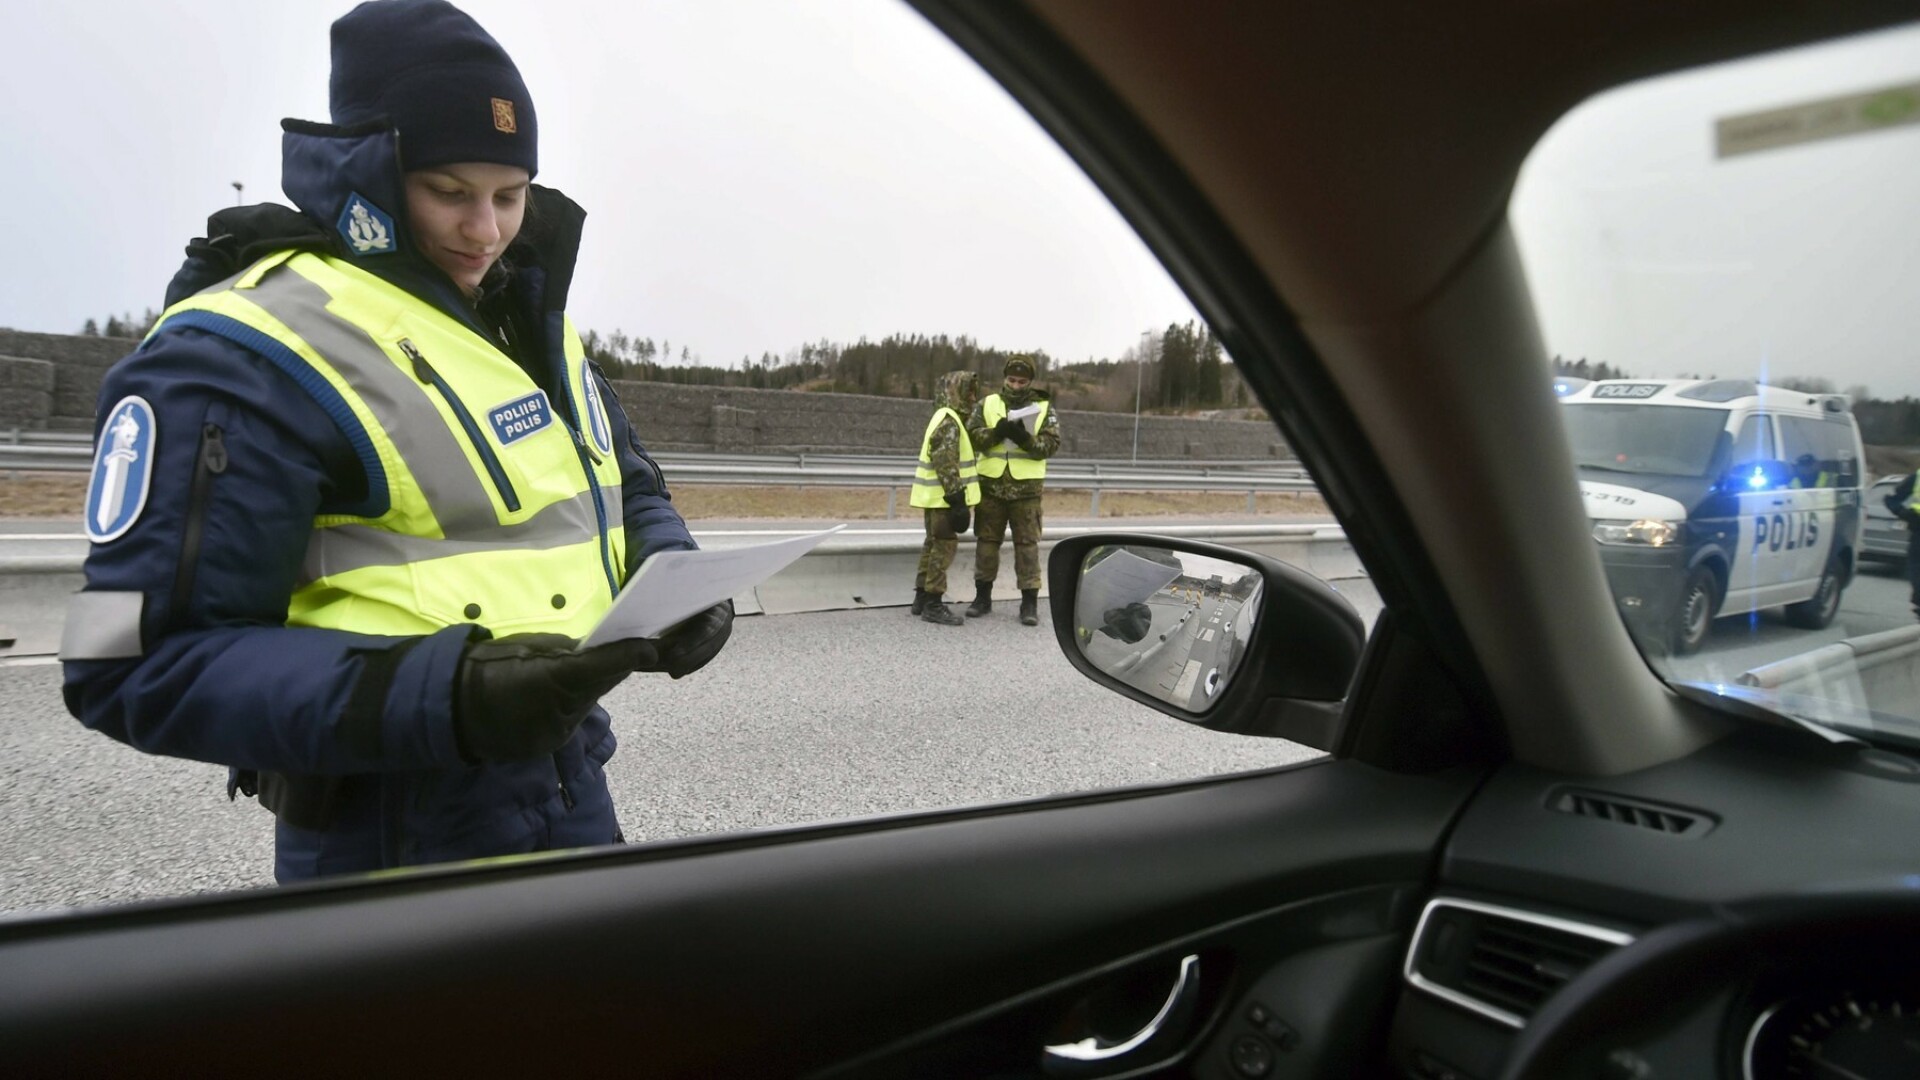 politie finlanda